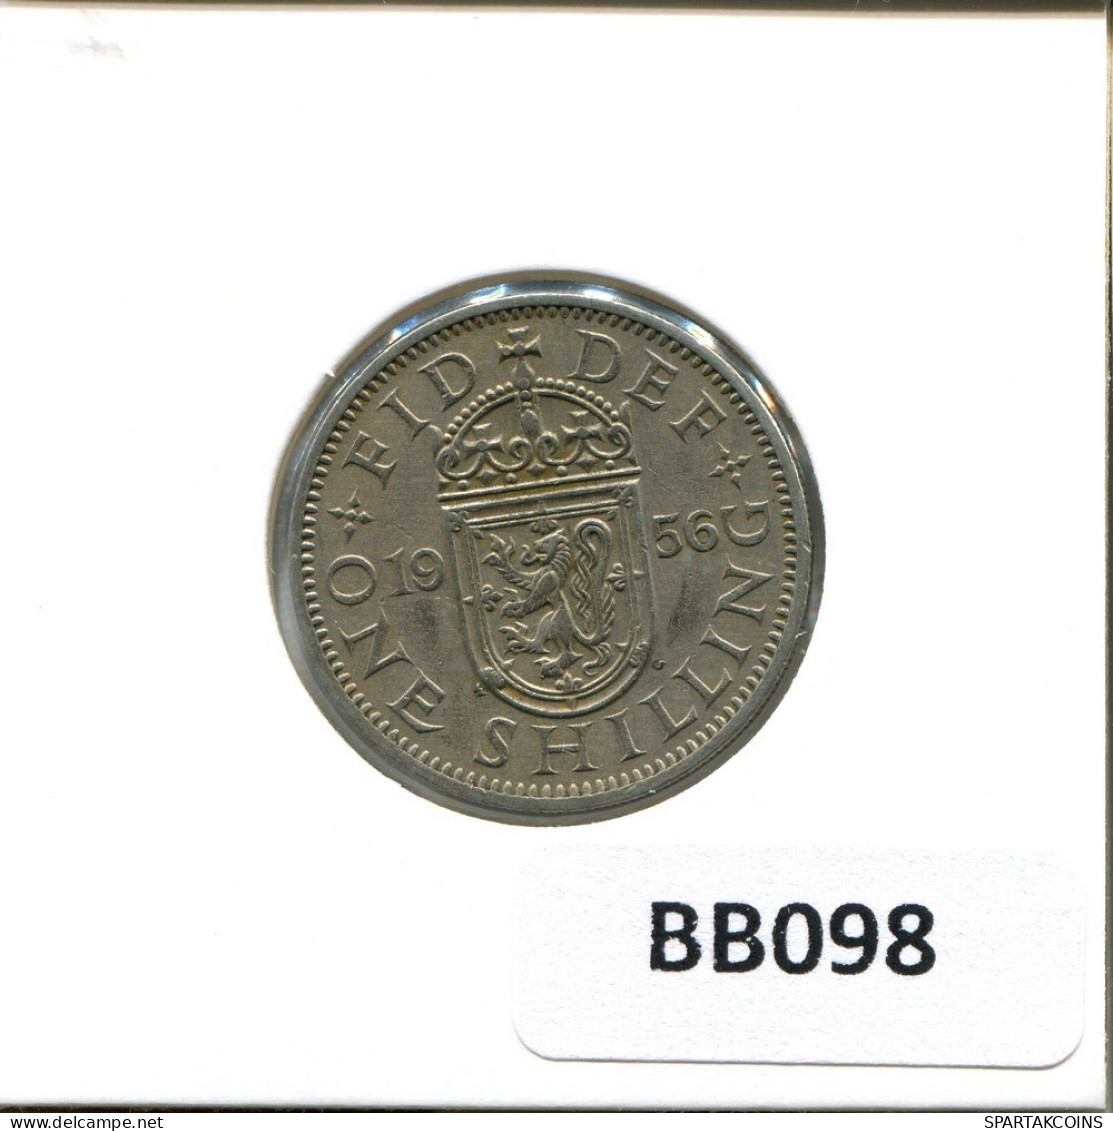 SHILLING 1956 UK GREAT BRITAIN Coin #BB098.U.A - I. 1 Shilling